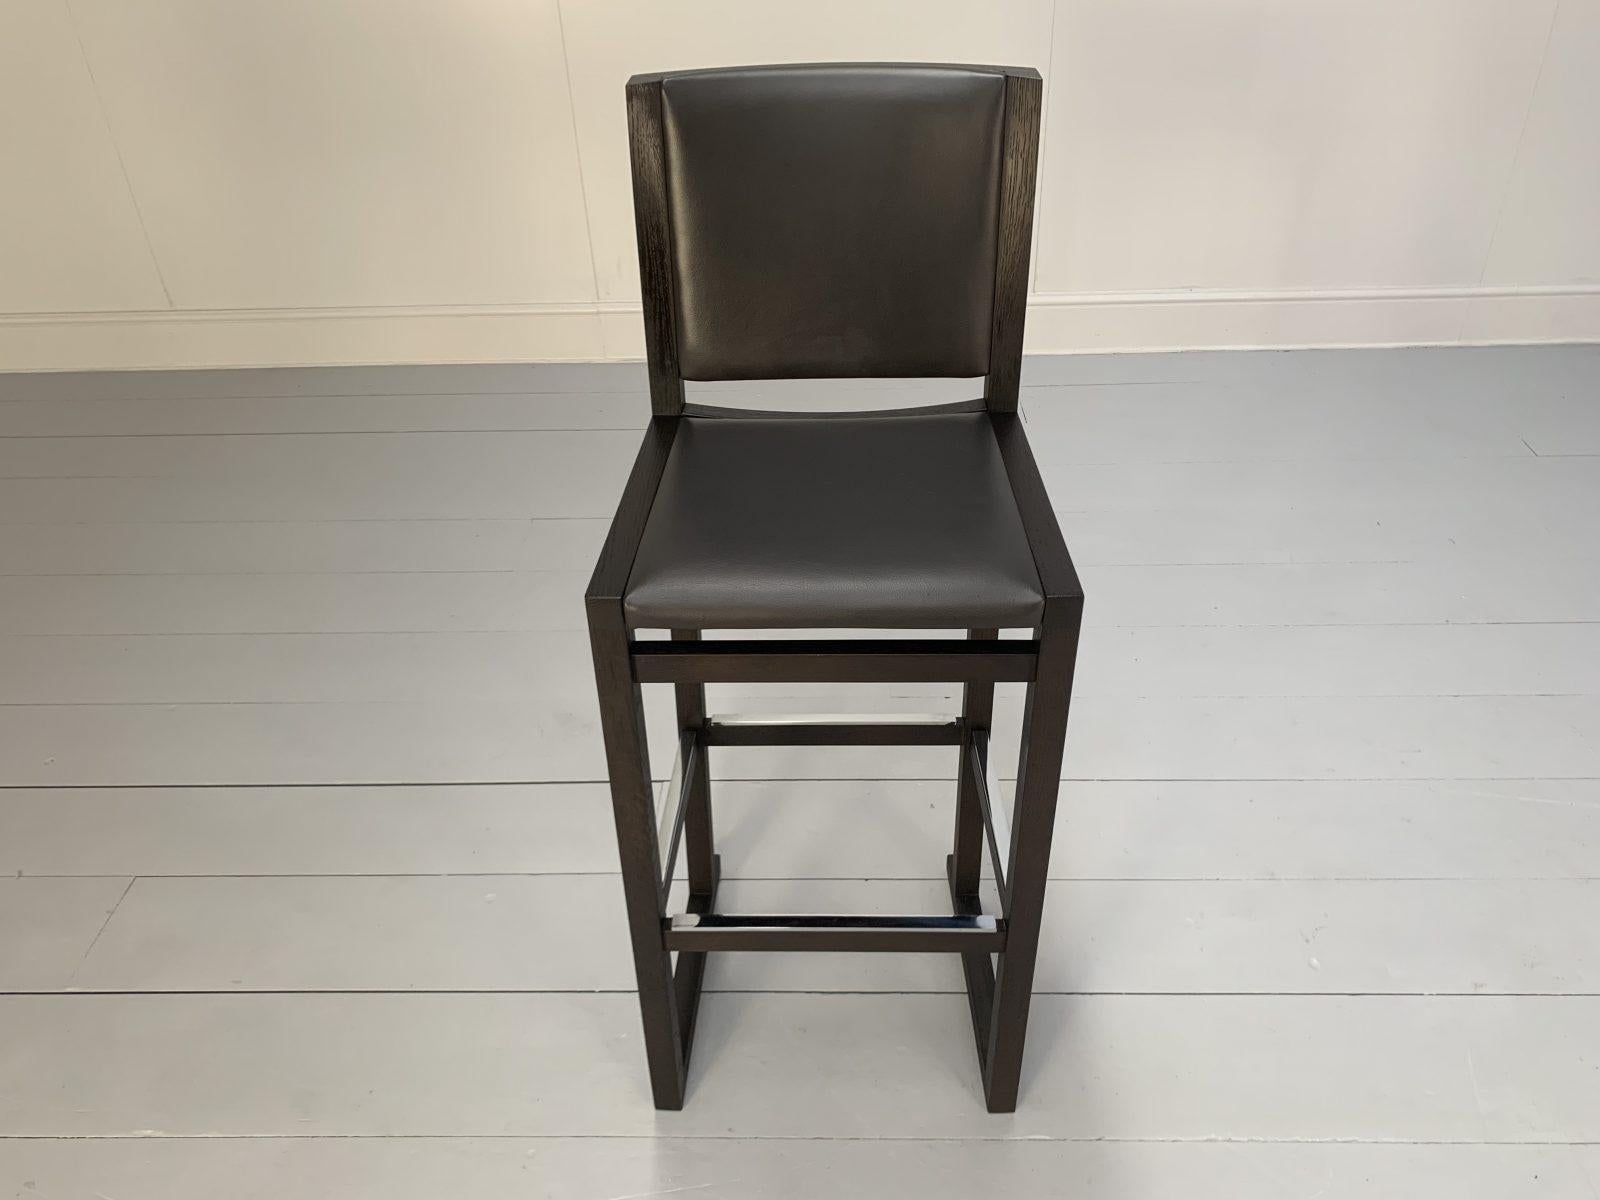 Pair of B&B Italia “Musa SM46G” Tall Bar Stool Chairs – In Dark Grey “Kasia” Lea For Sale 2